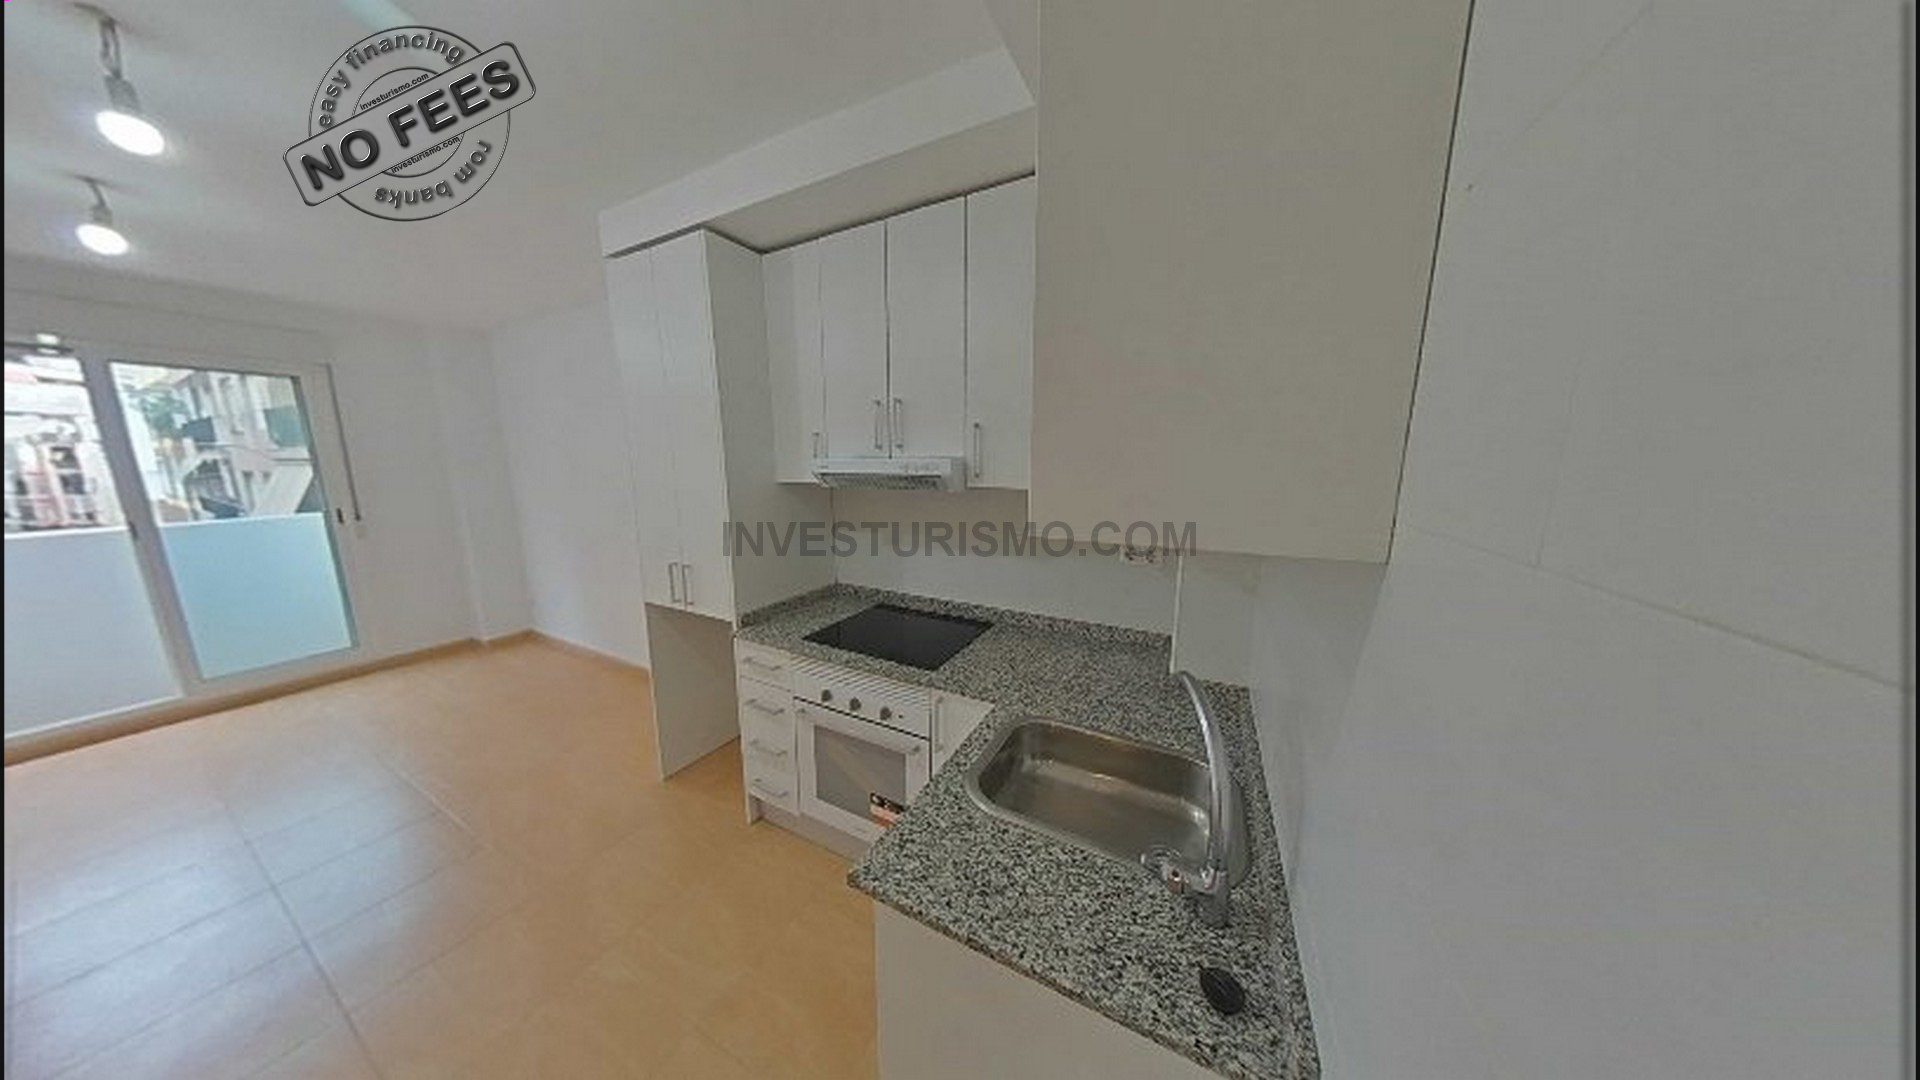 Apartment 2 bedrooms 2 bathrooms in Alicante center